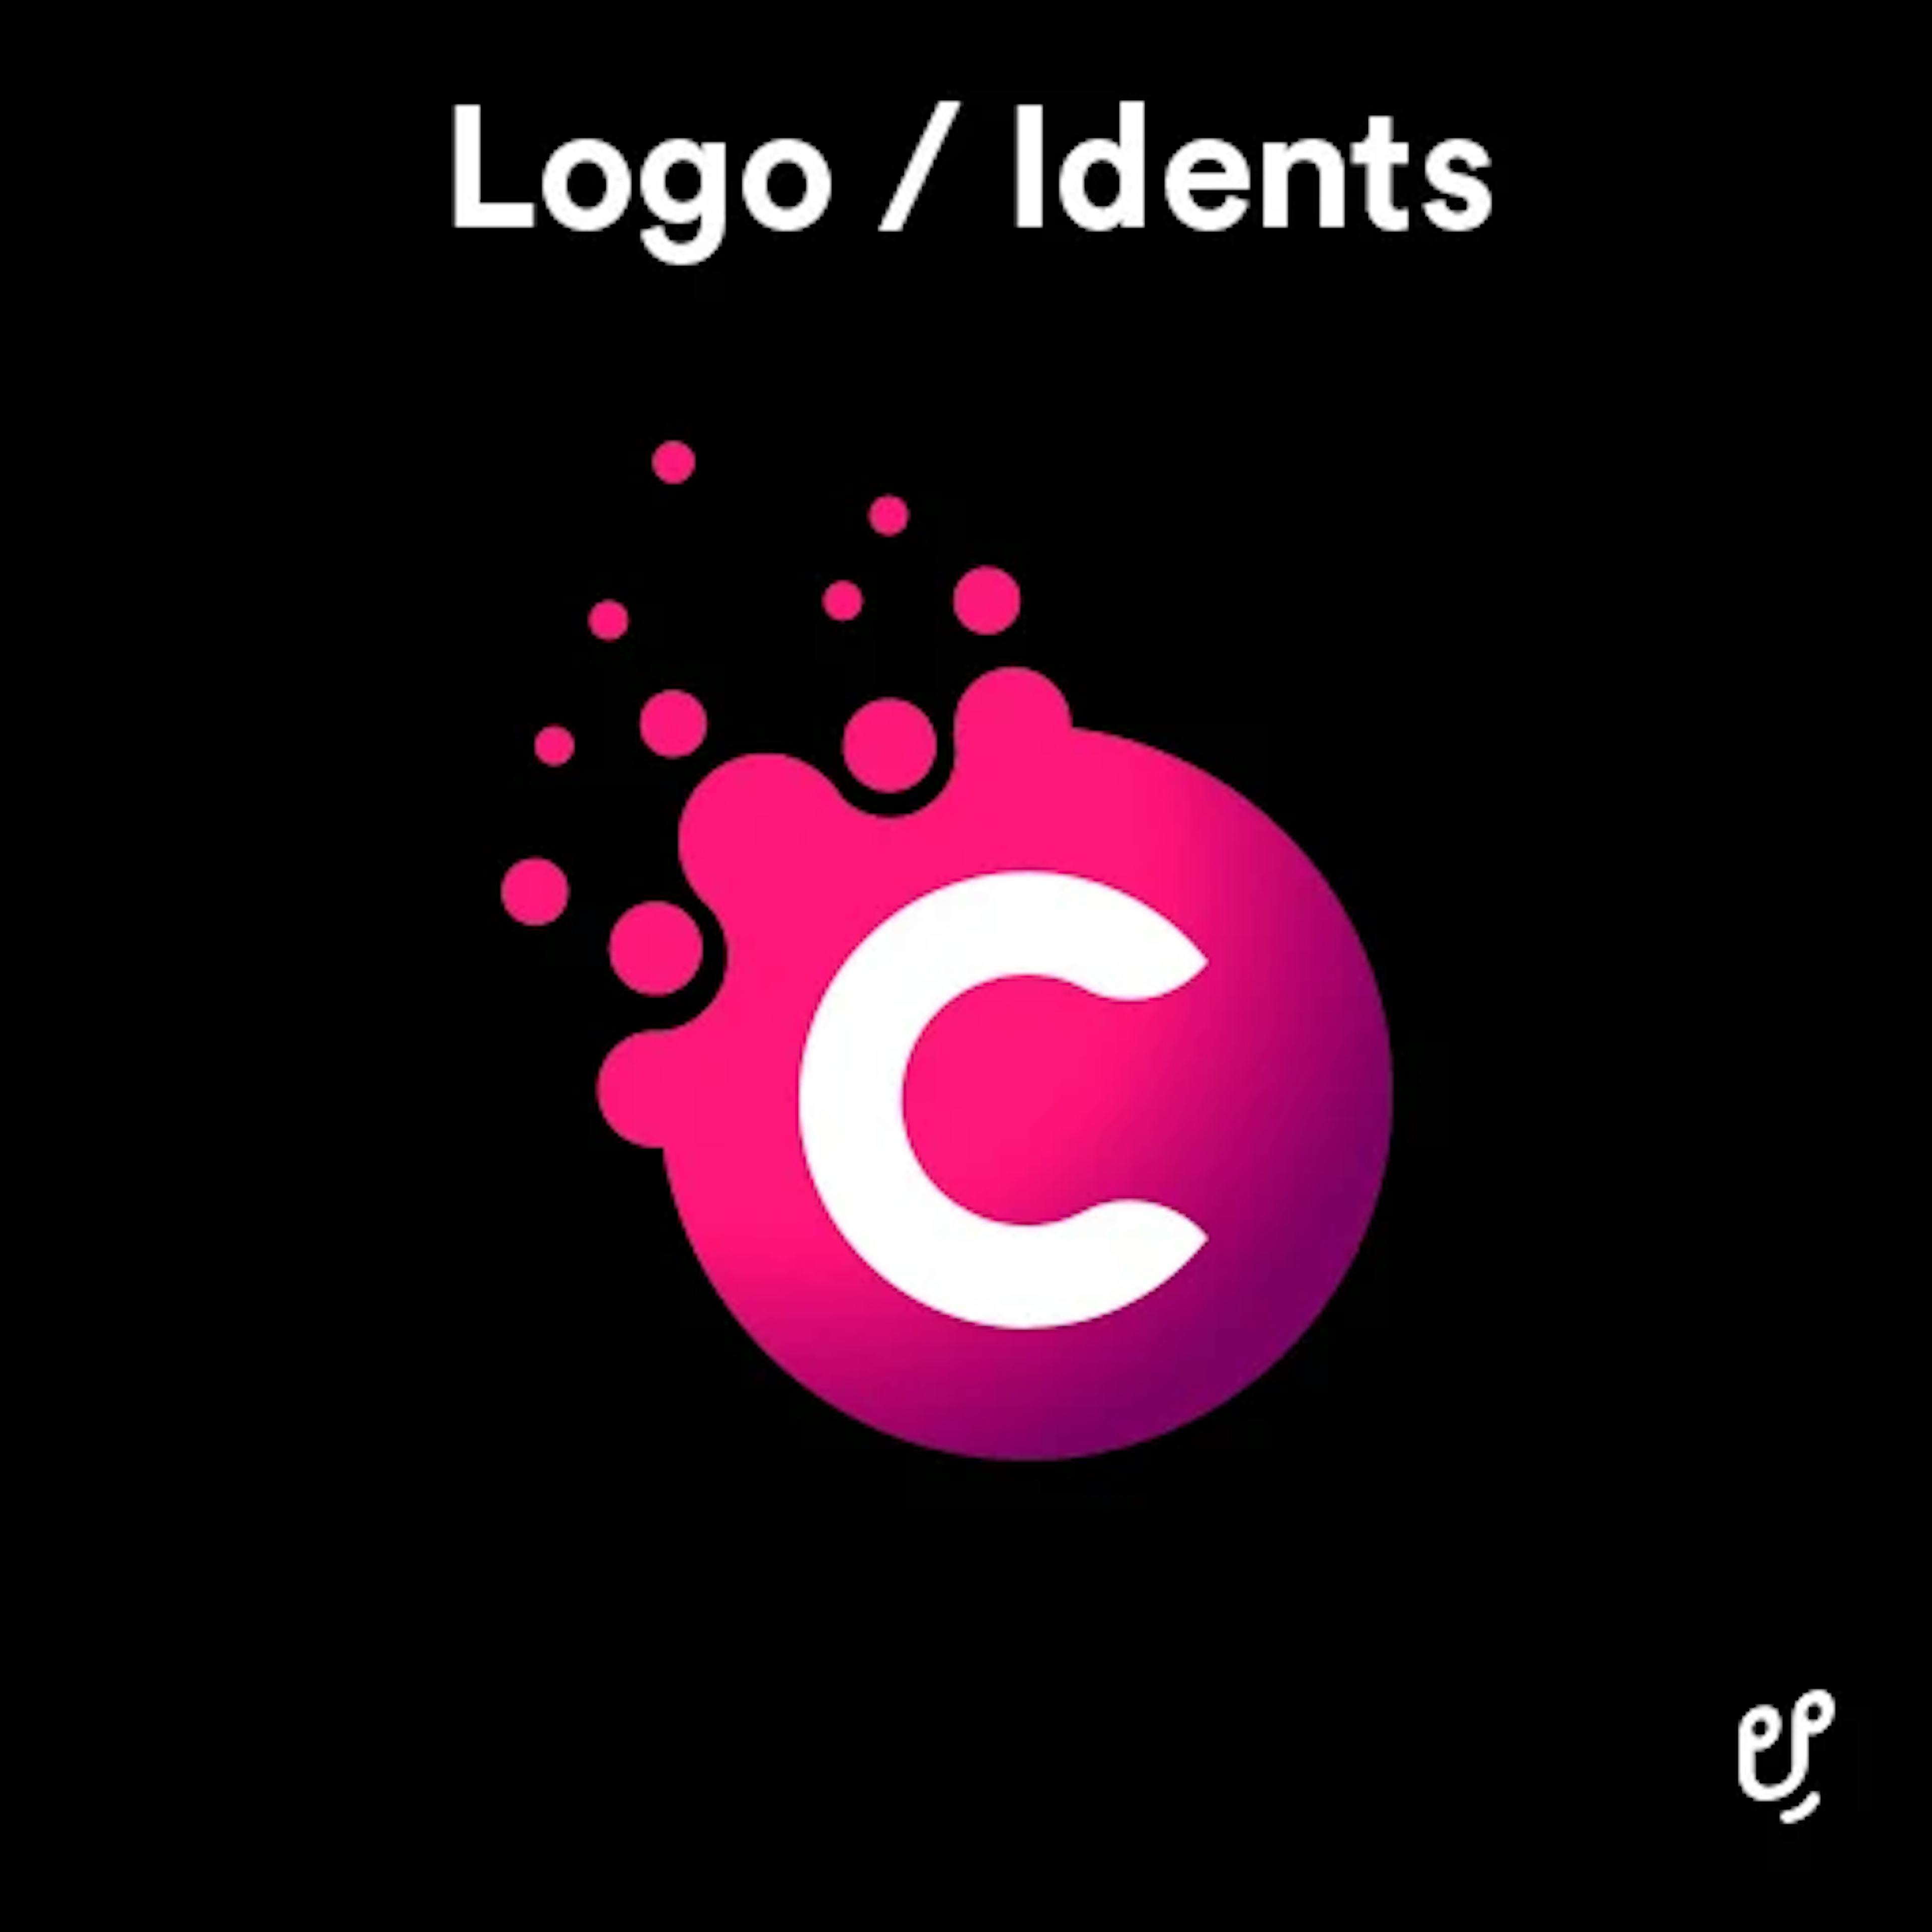 Logos / Idents artwork